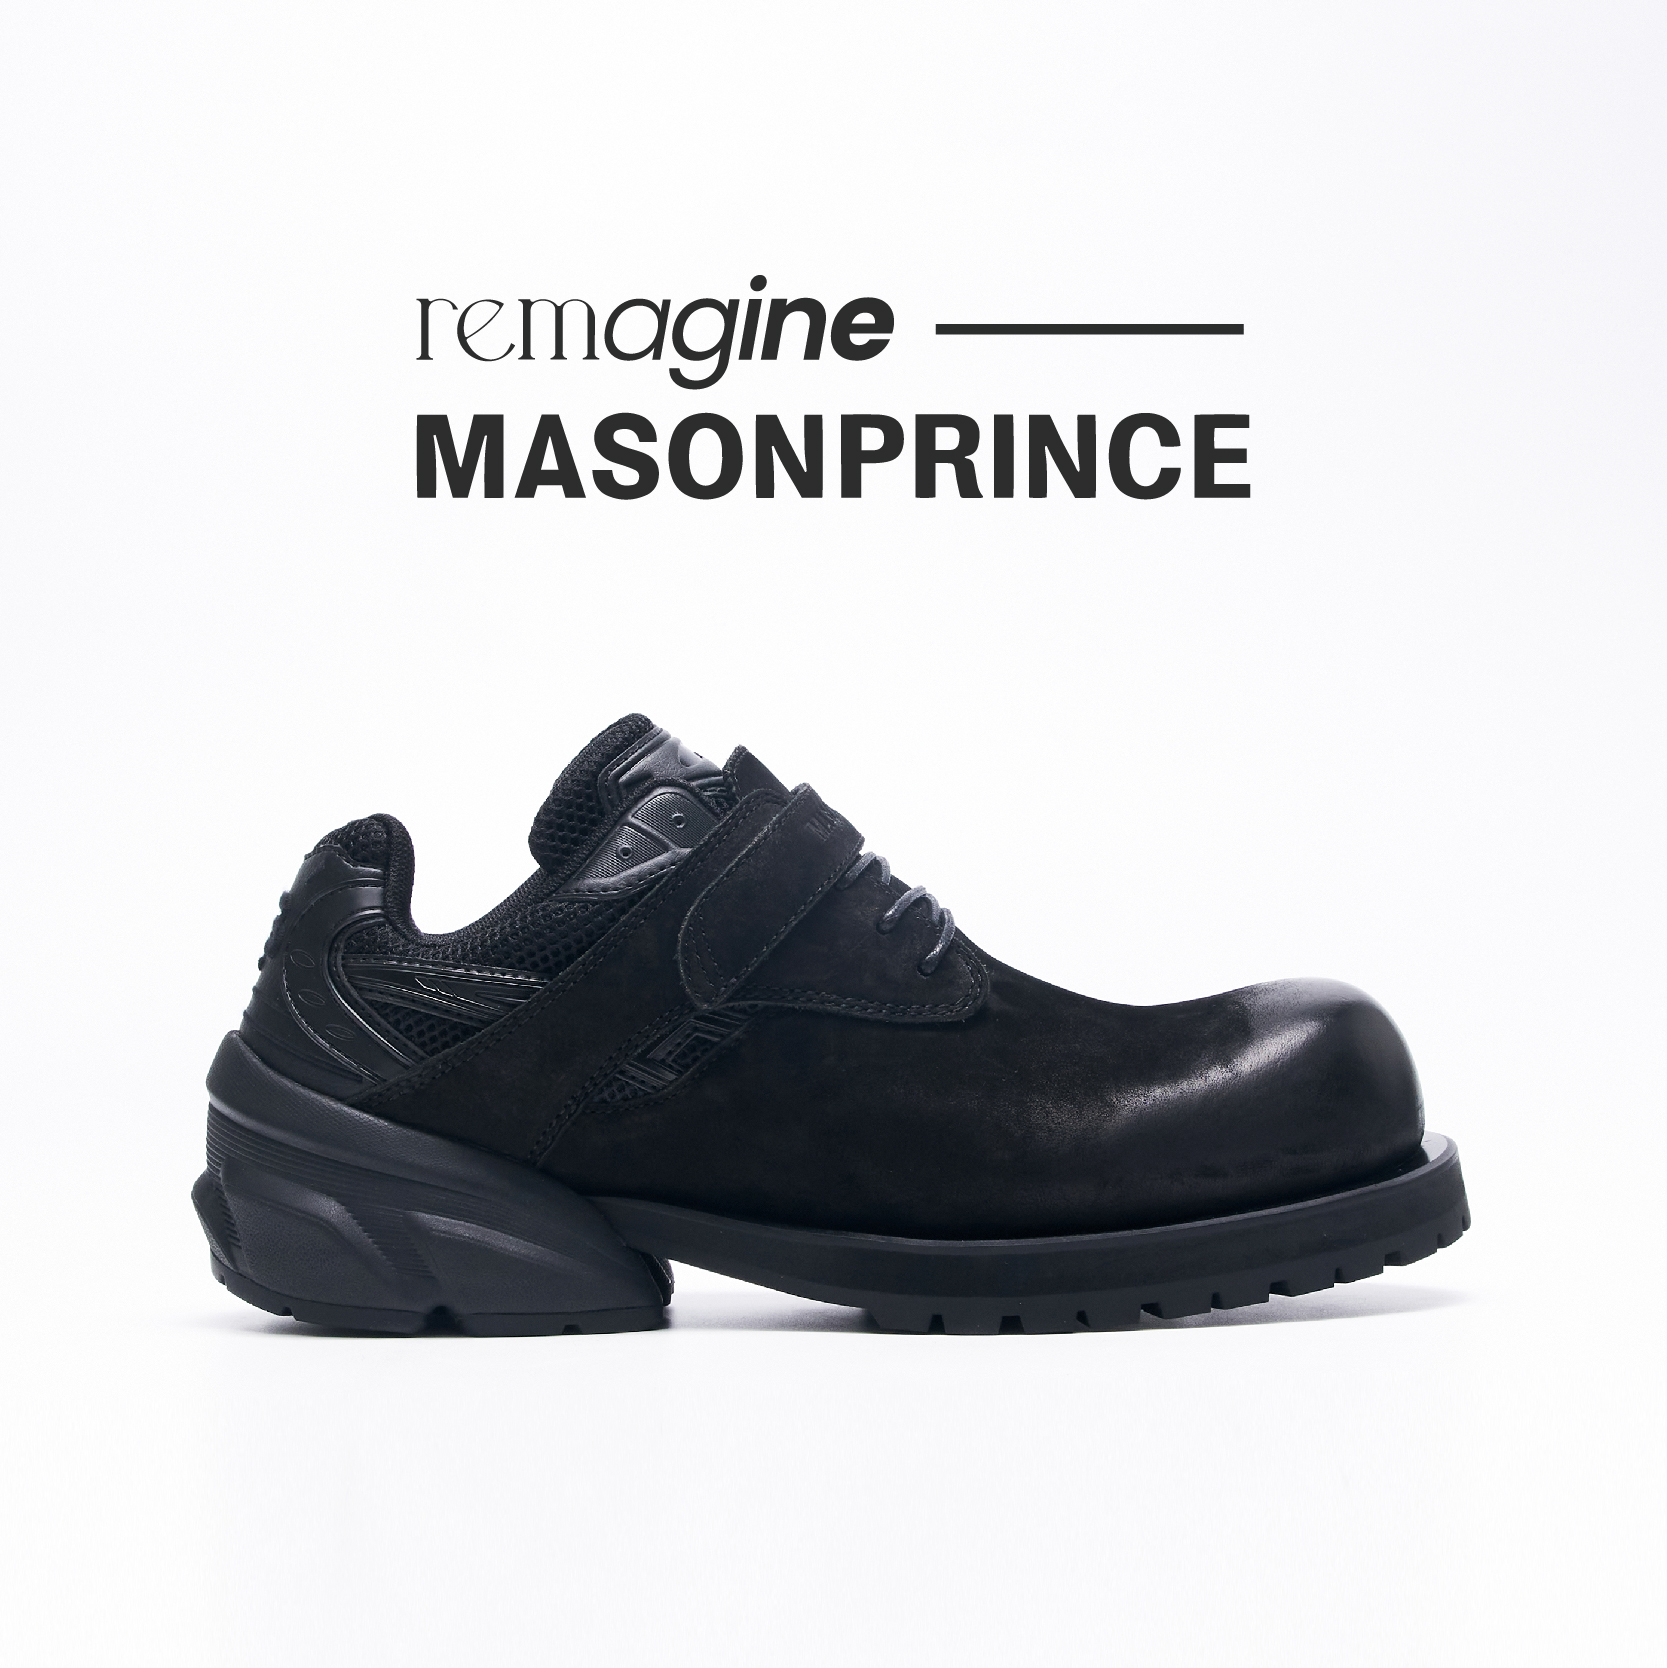 Remagine & Mason Prince - hybrid derby shoes “starting bigger”